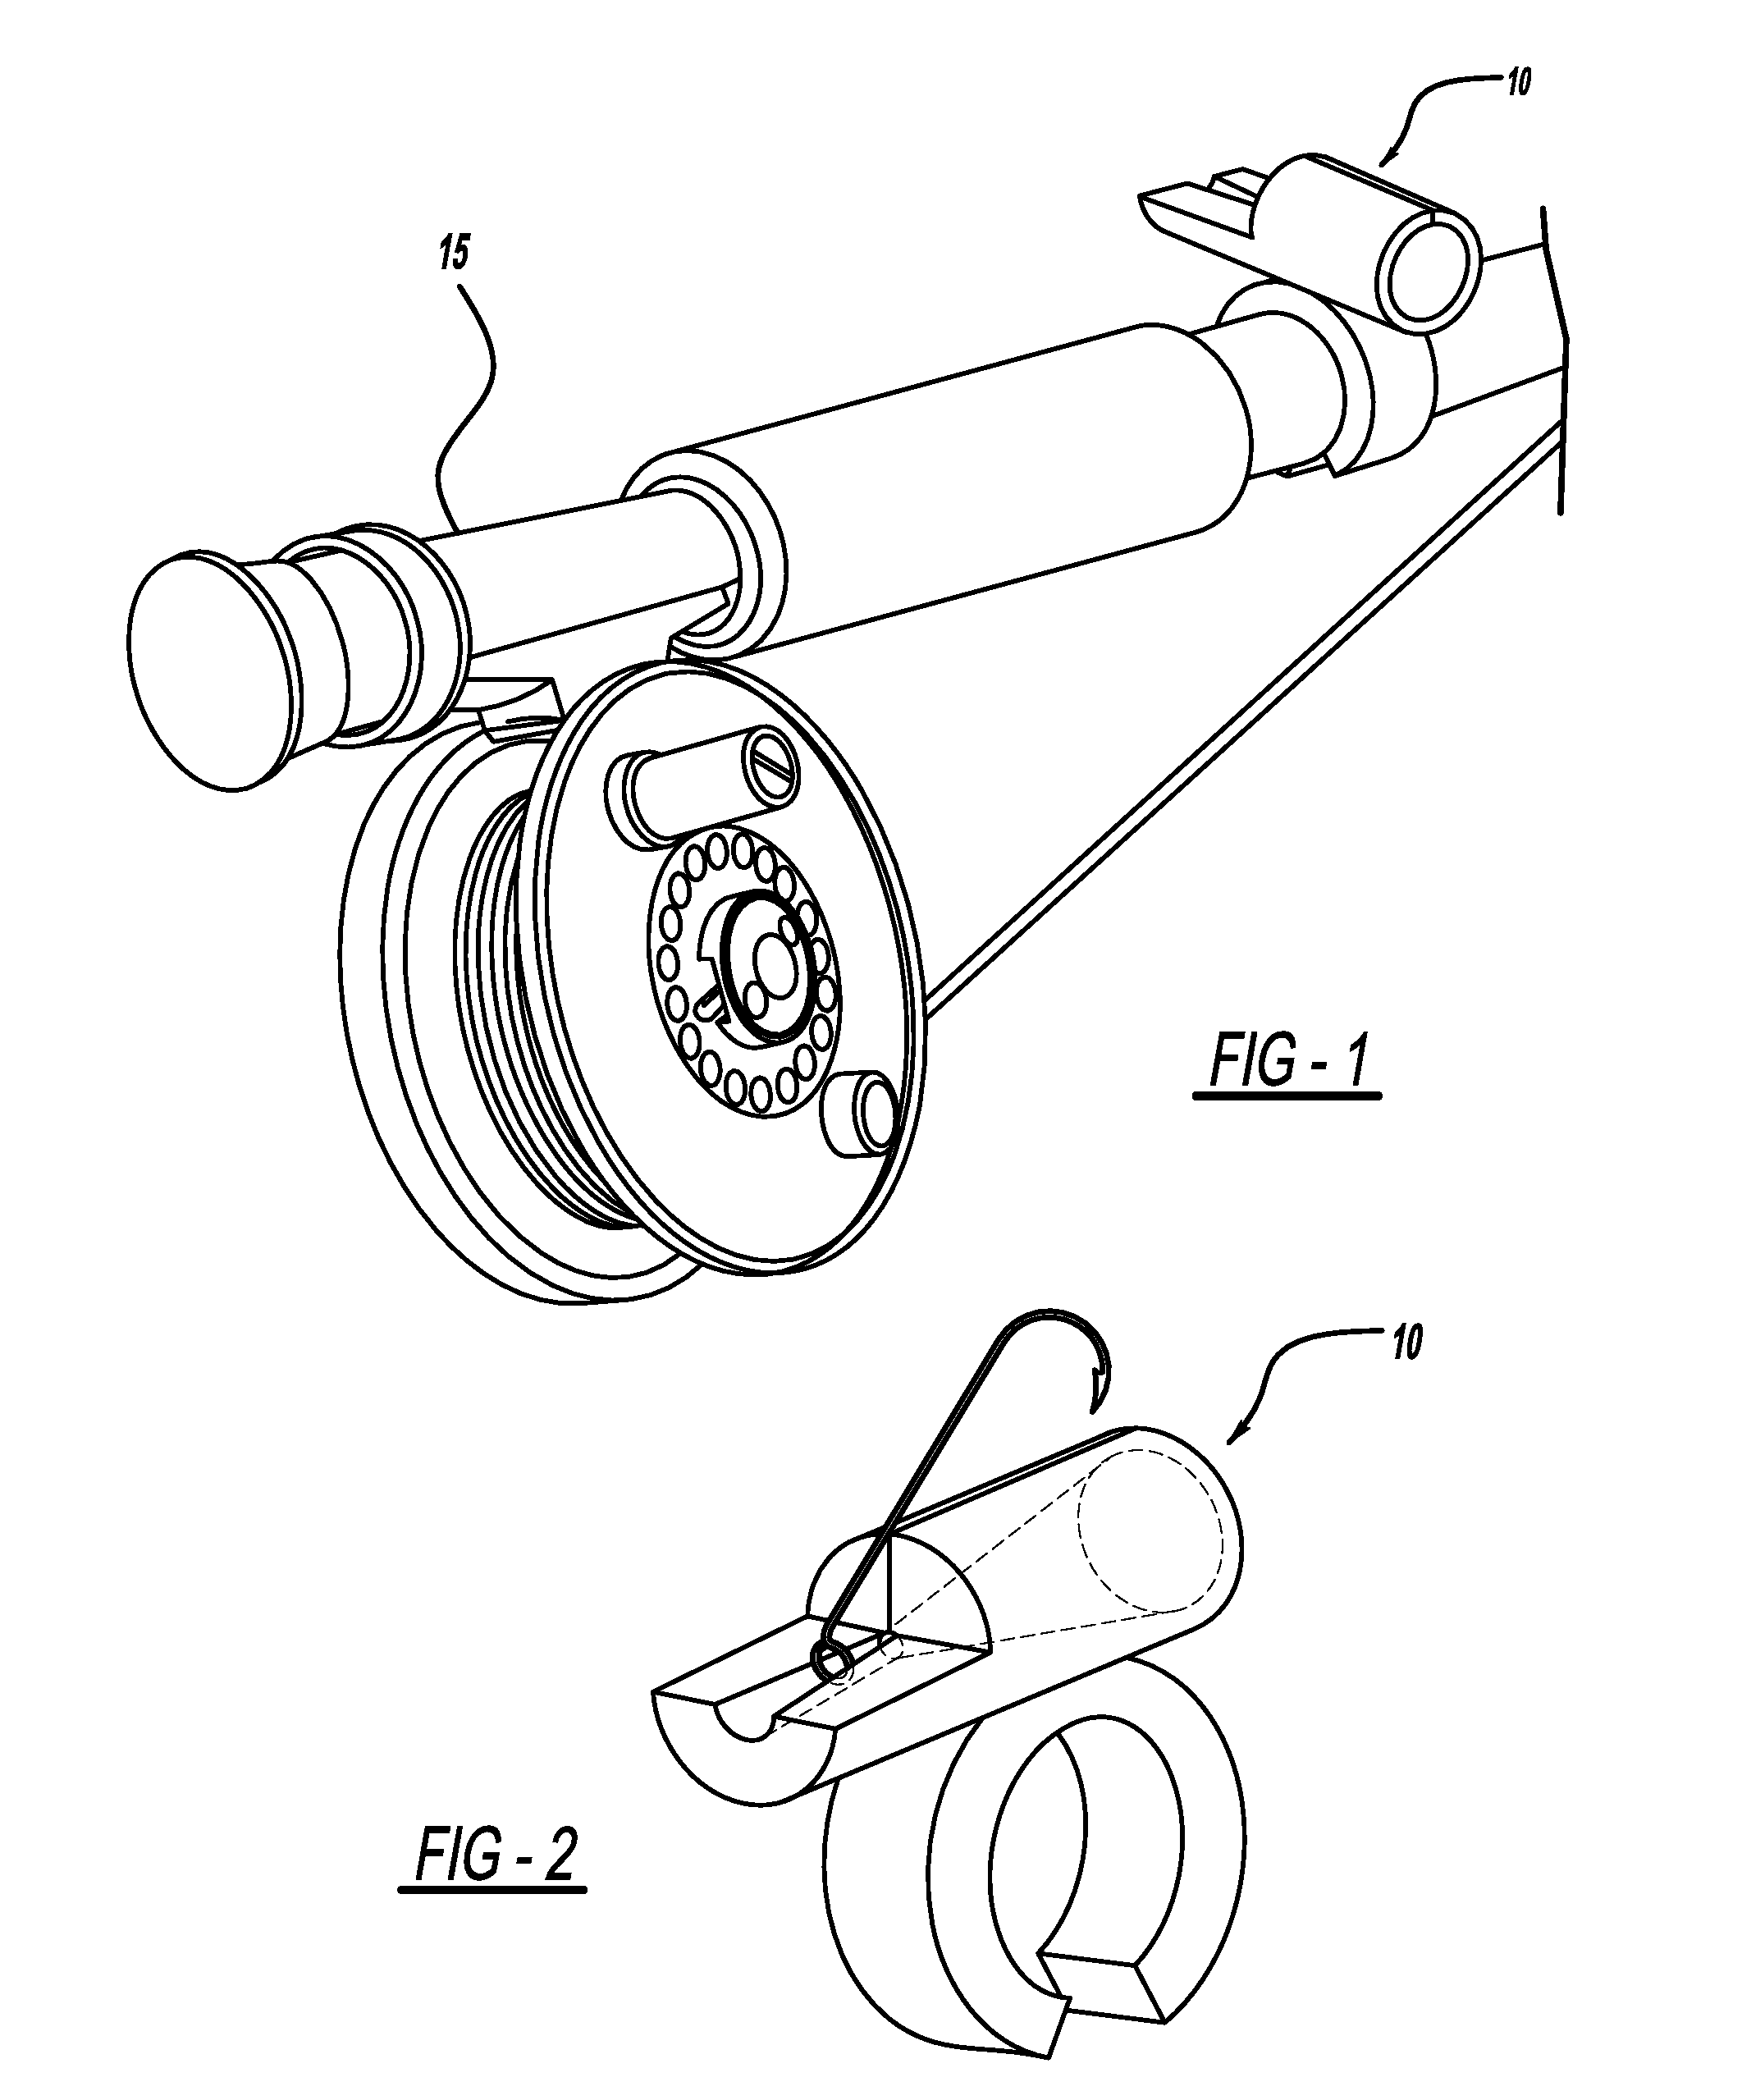 Flyhook threader and tying apparatus